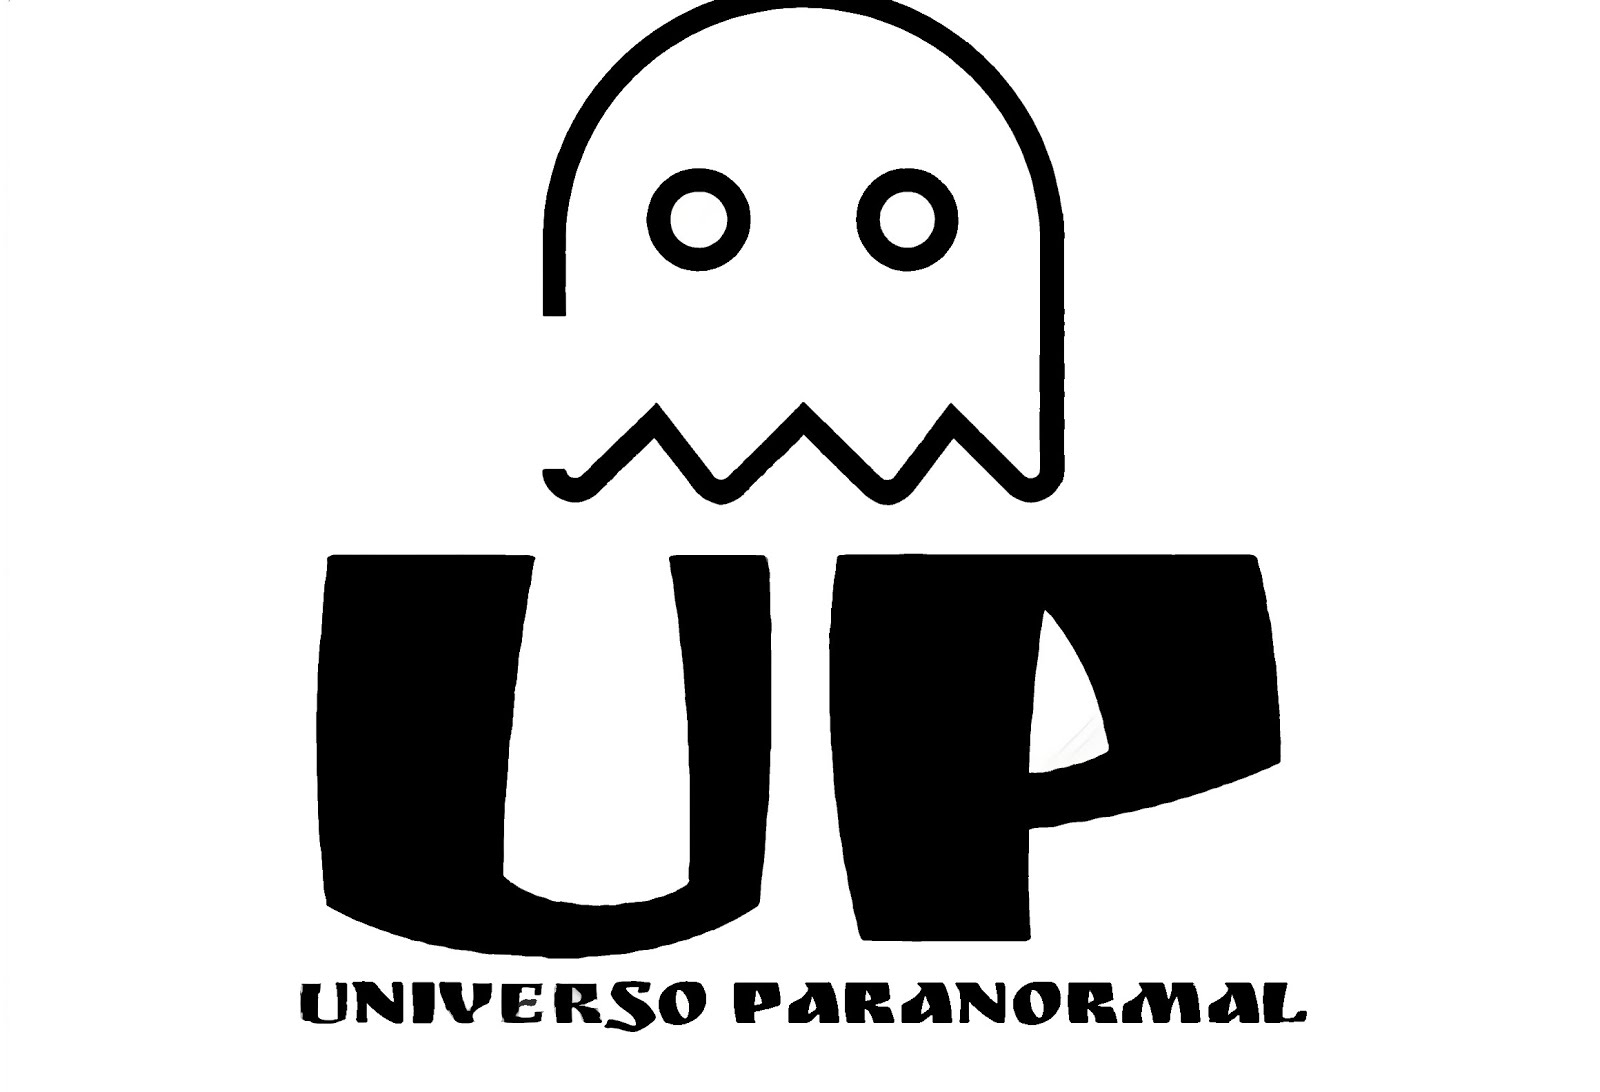 Universo Paranormal